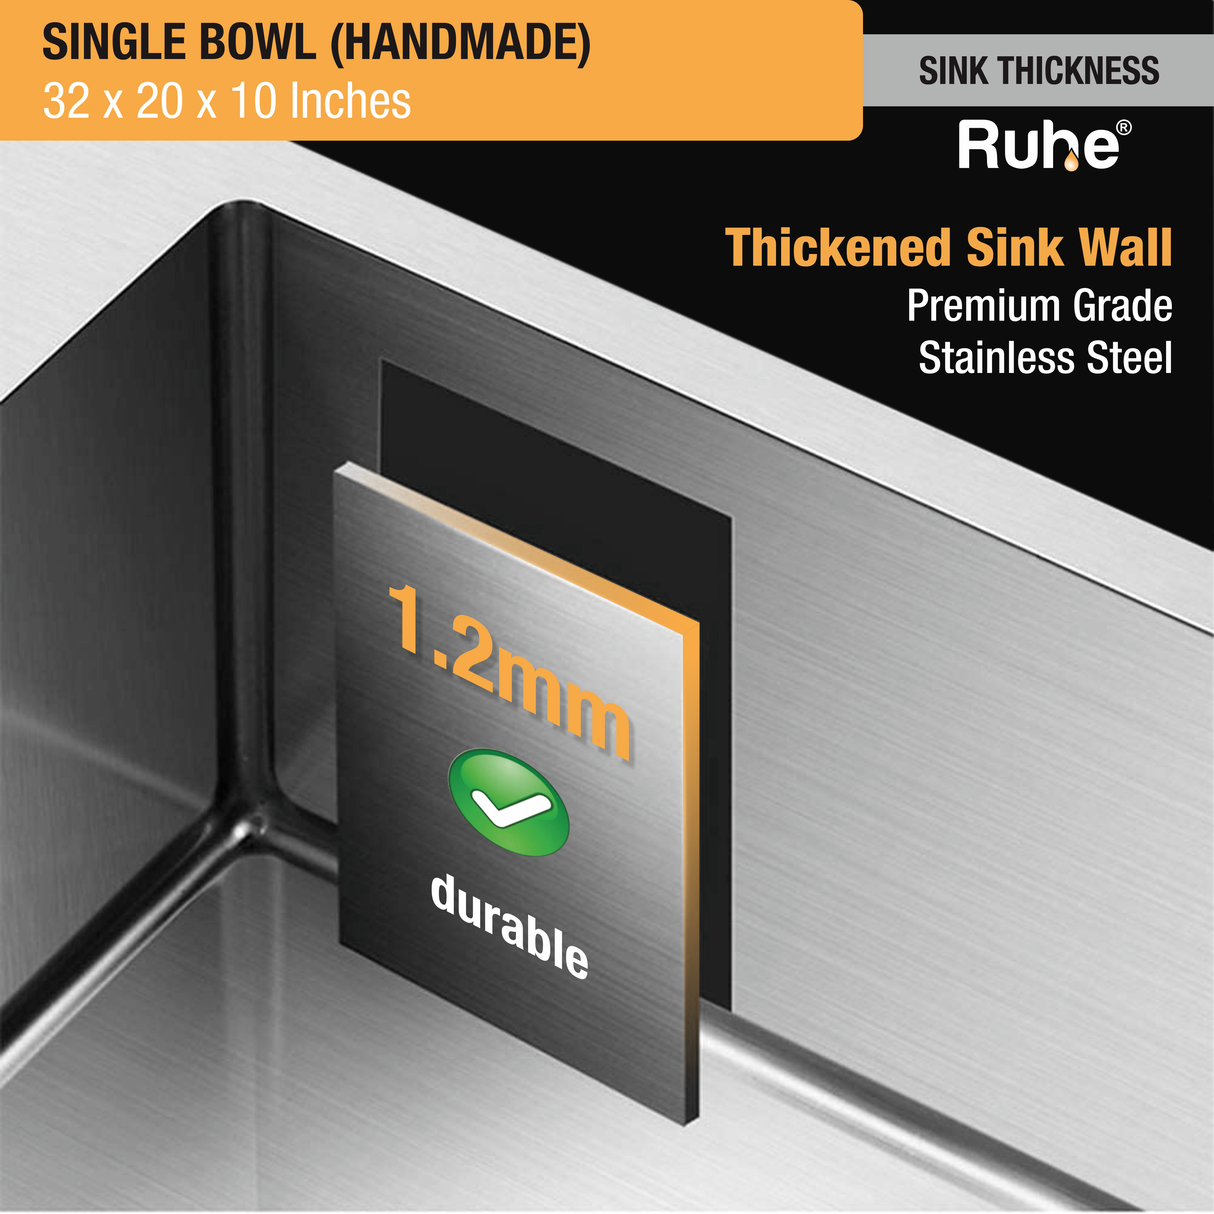 Handmade Single Bowl Premium Kitchen Sink (32 x 20 x 10 Inches) steel thickness